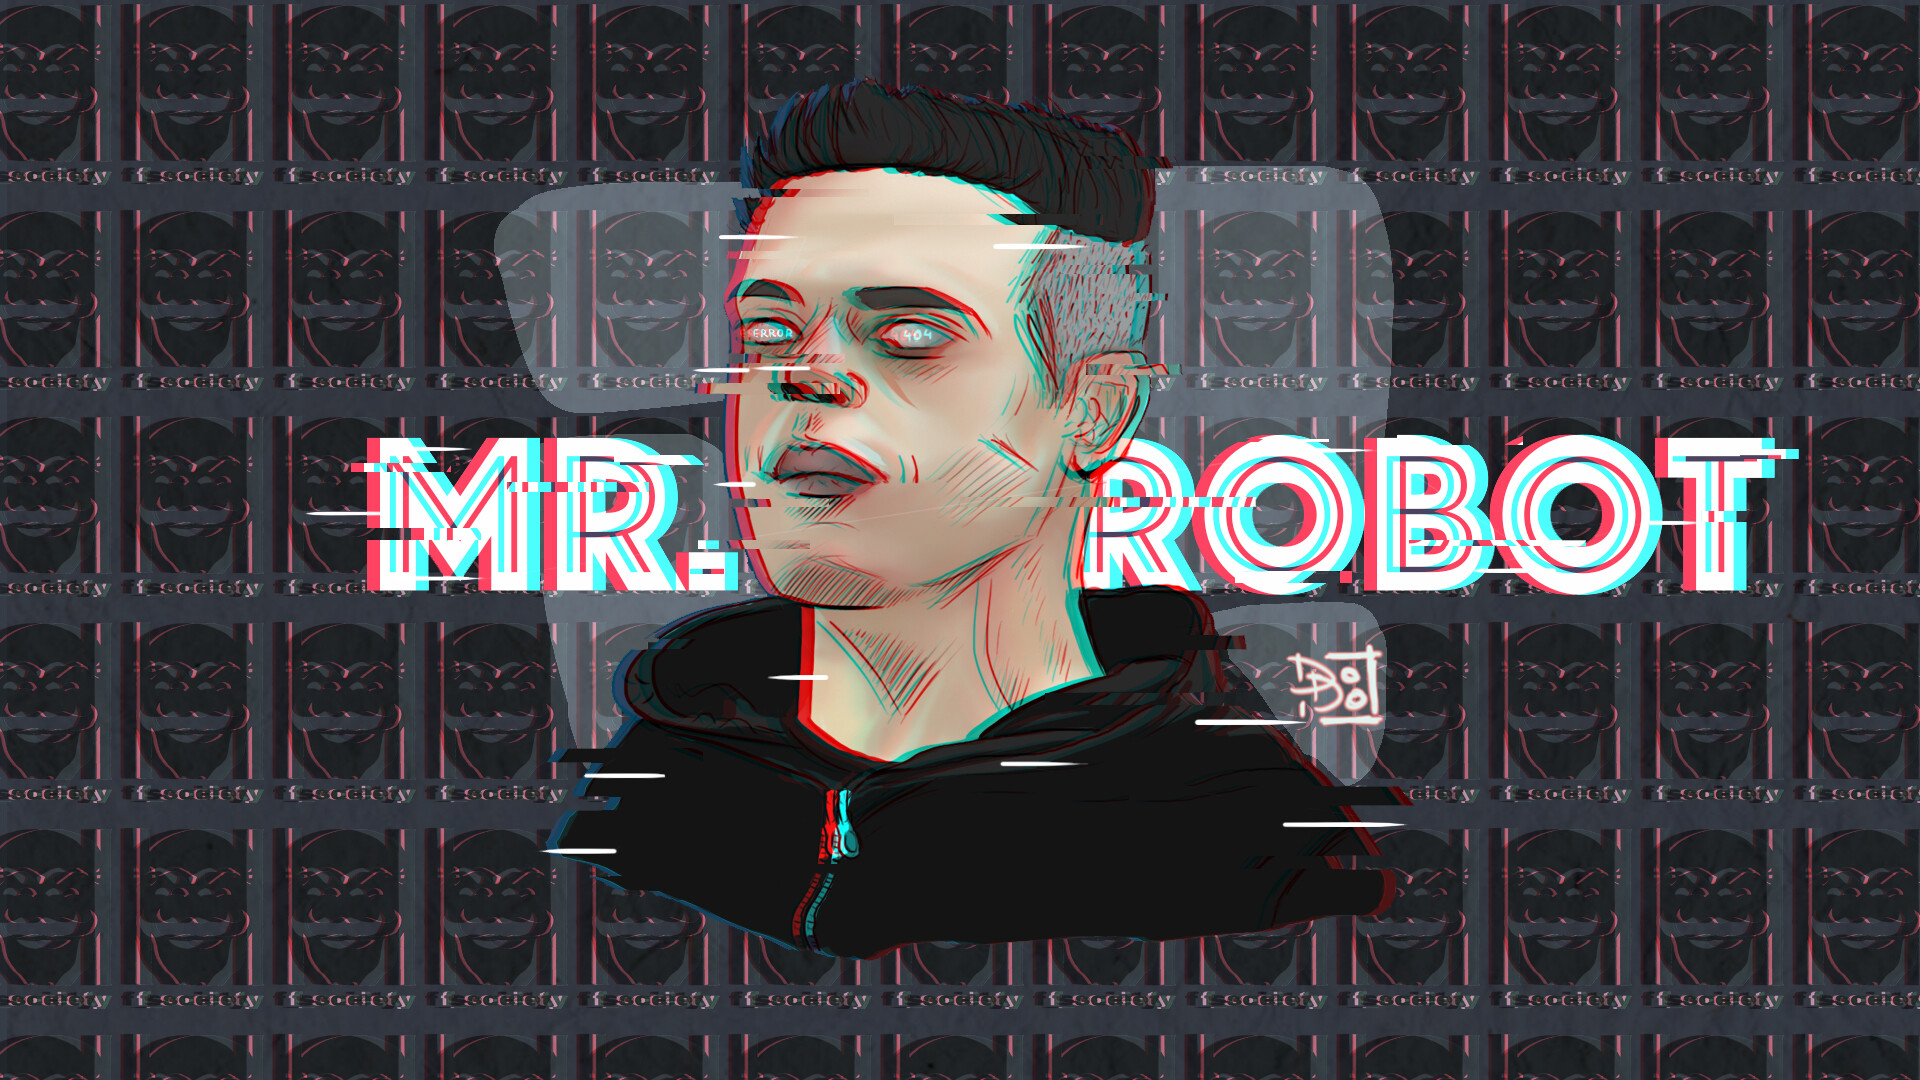 ArtStation - MR.ROBOT